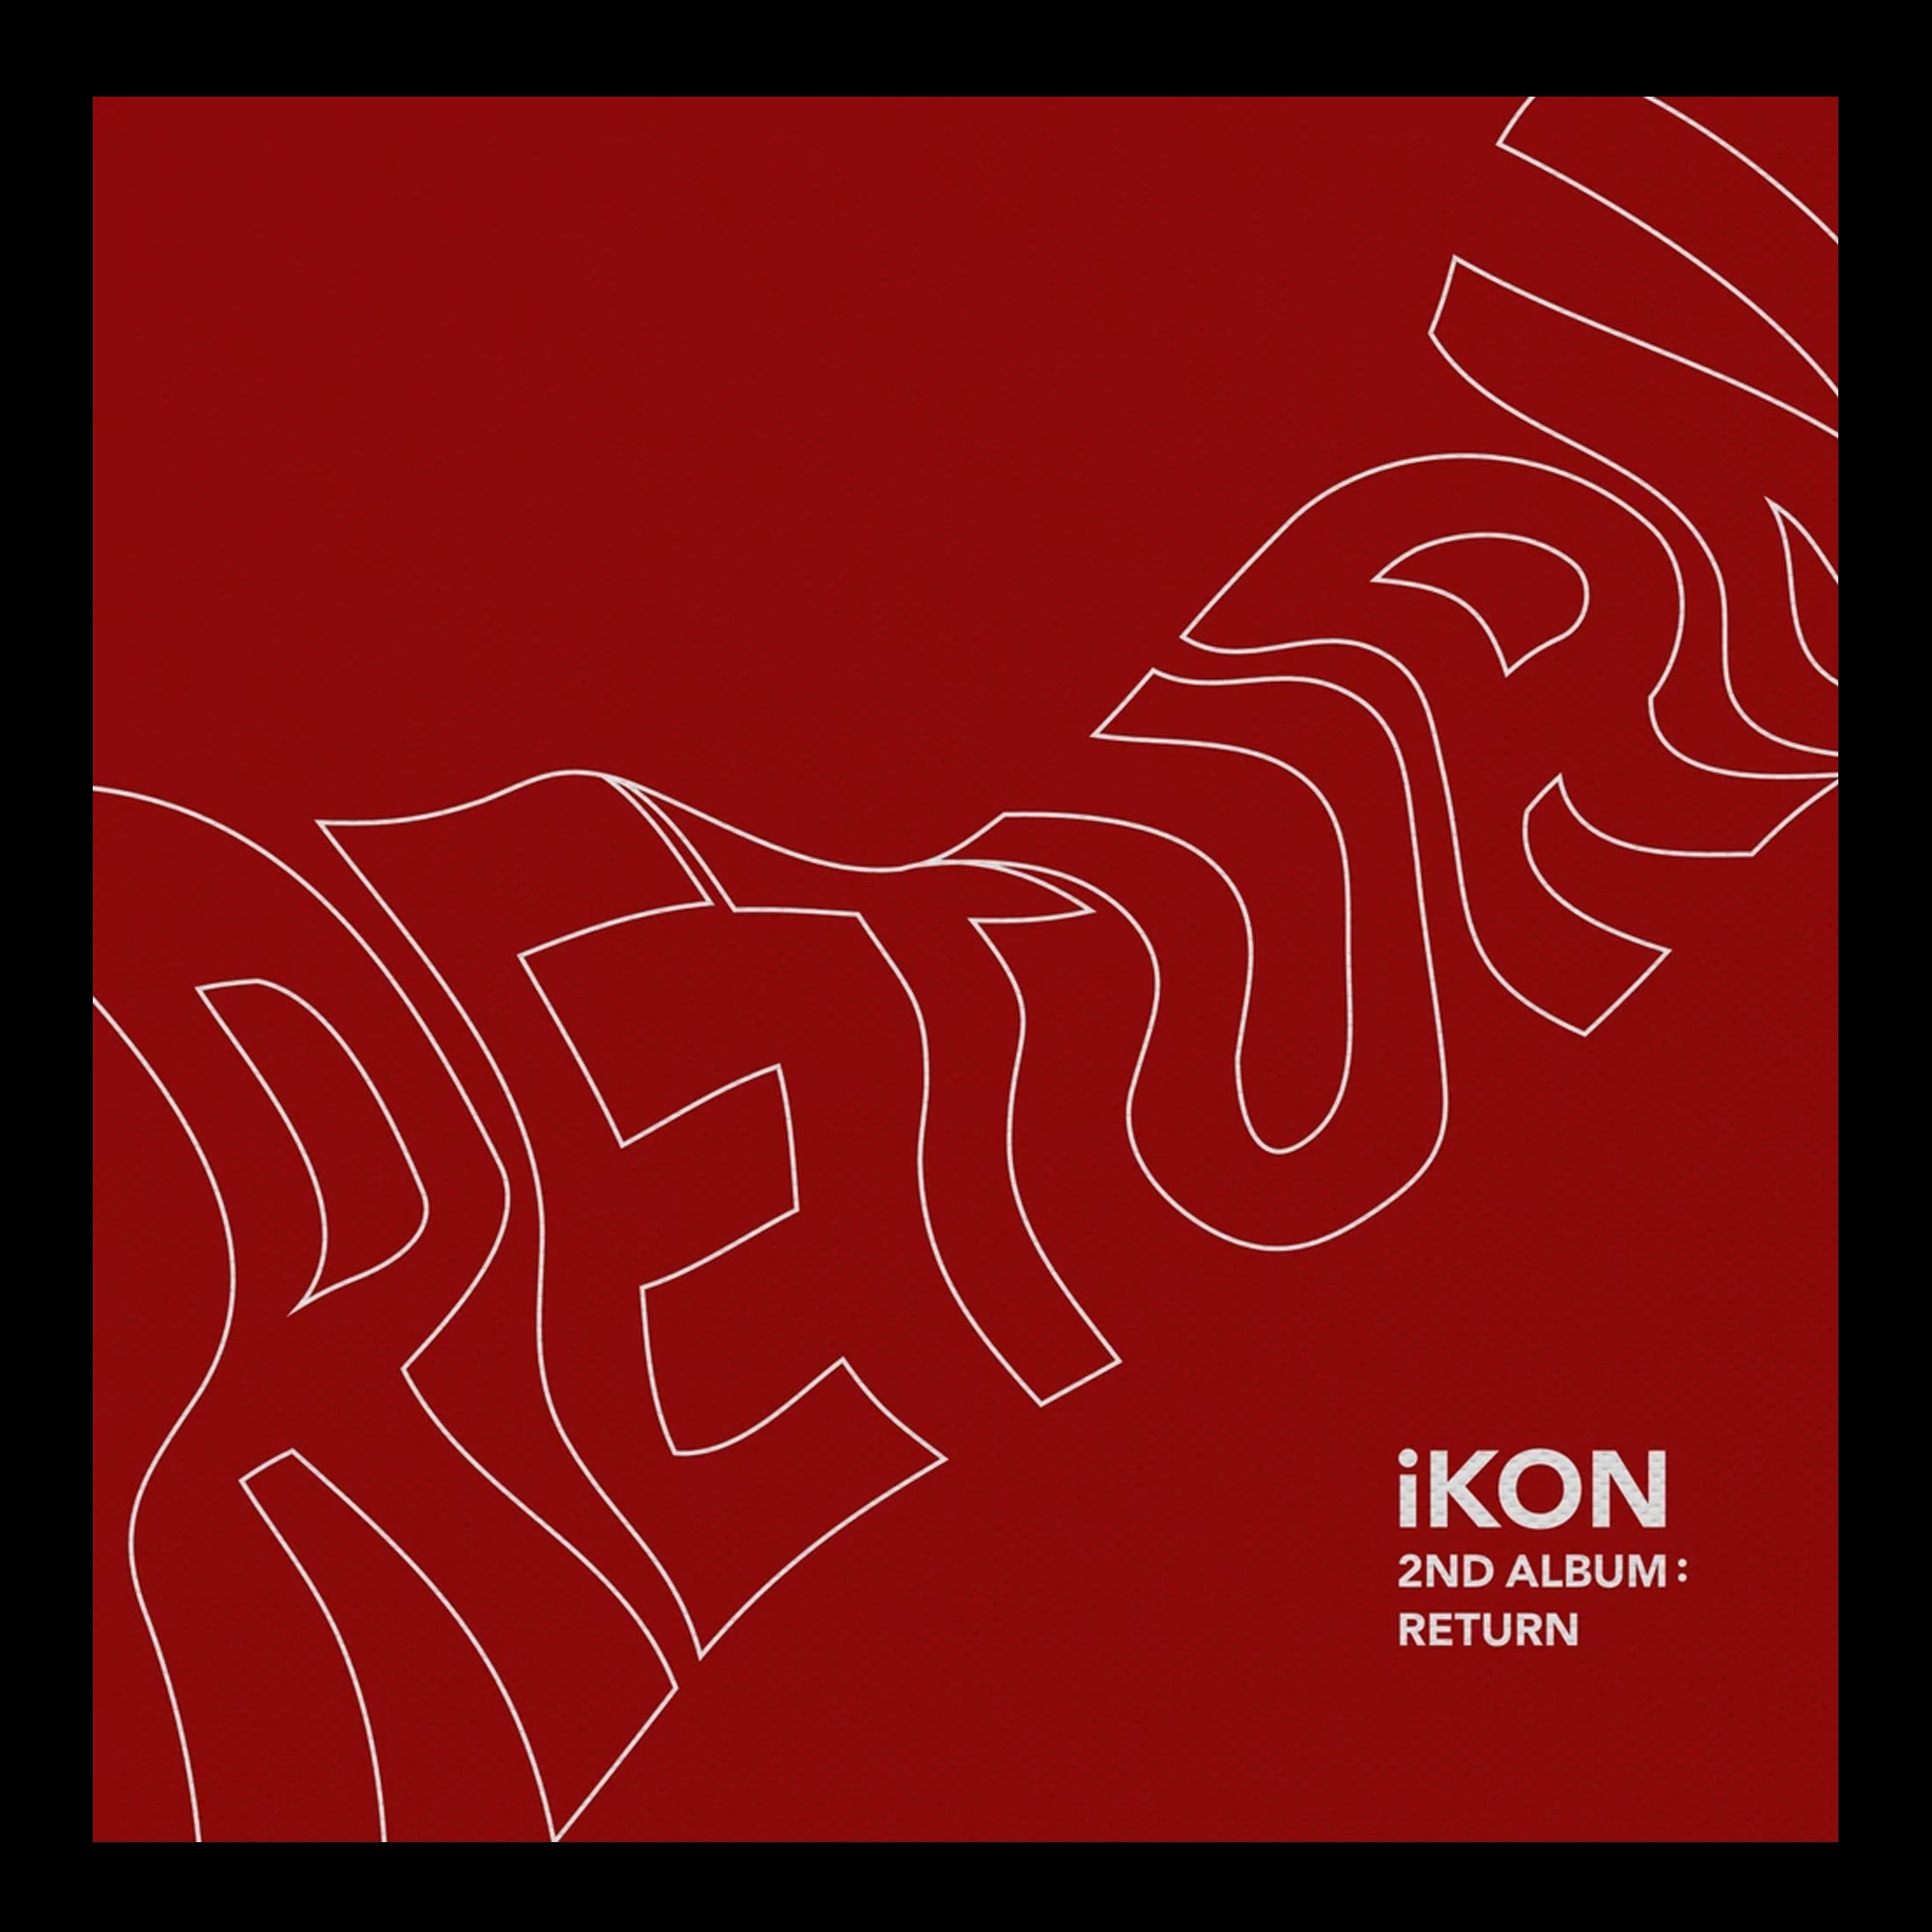 iKON - Return